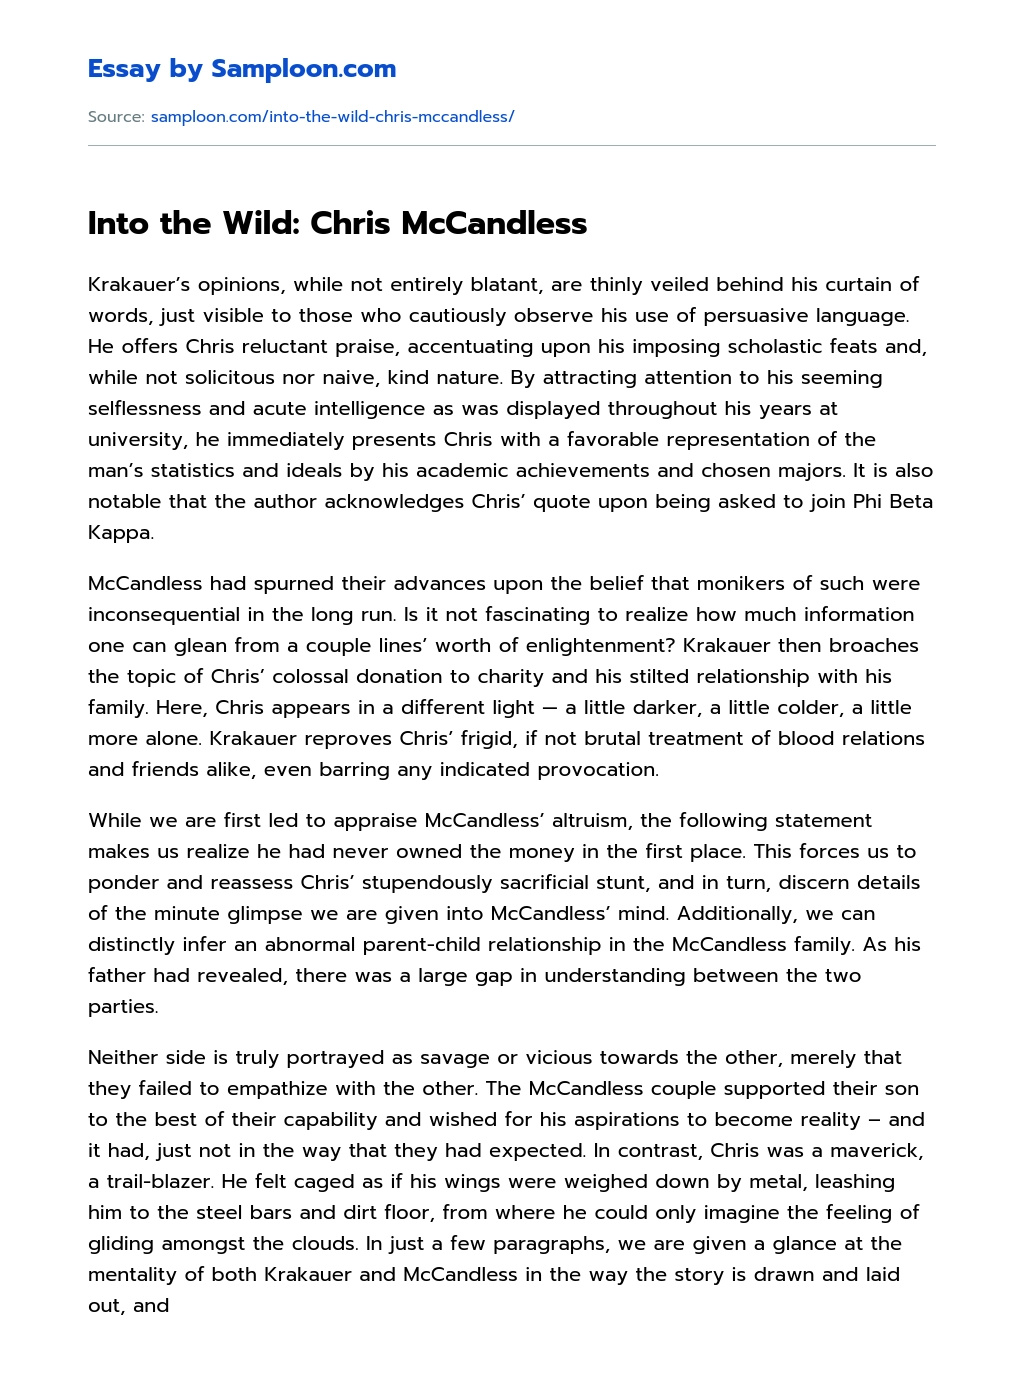 Into the Wild: Chris McCandless Argumentative Essay essay